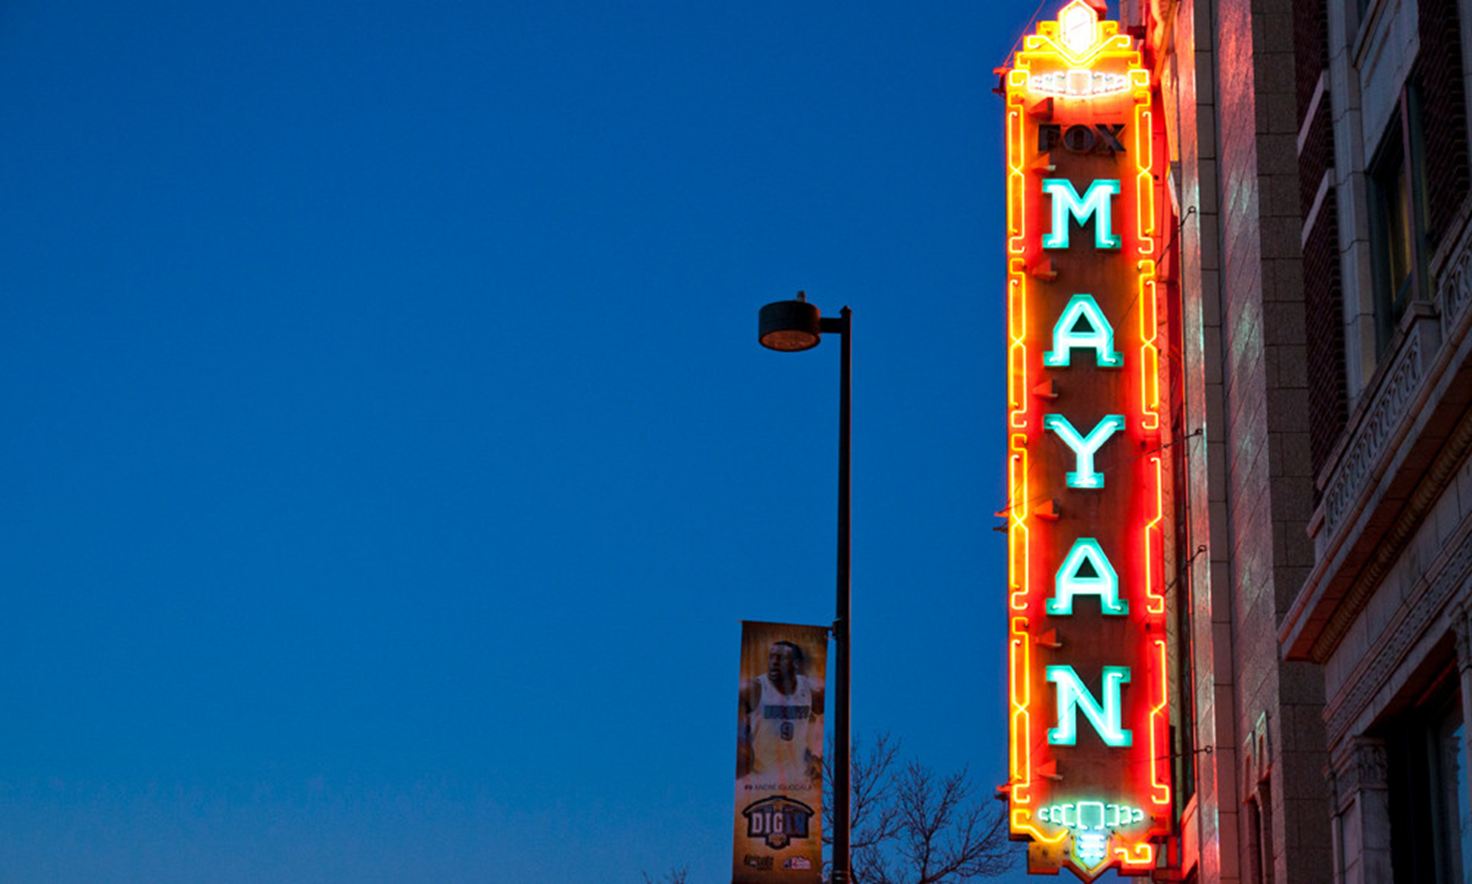 Landmark Mayan Theatre, Denver